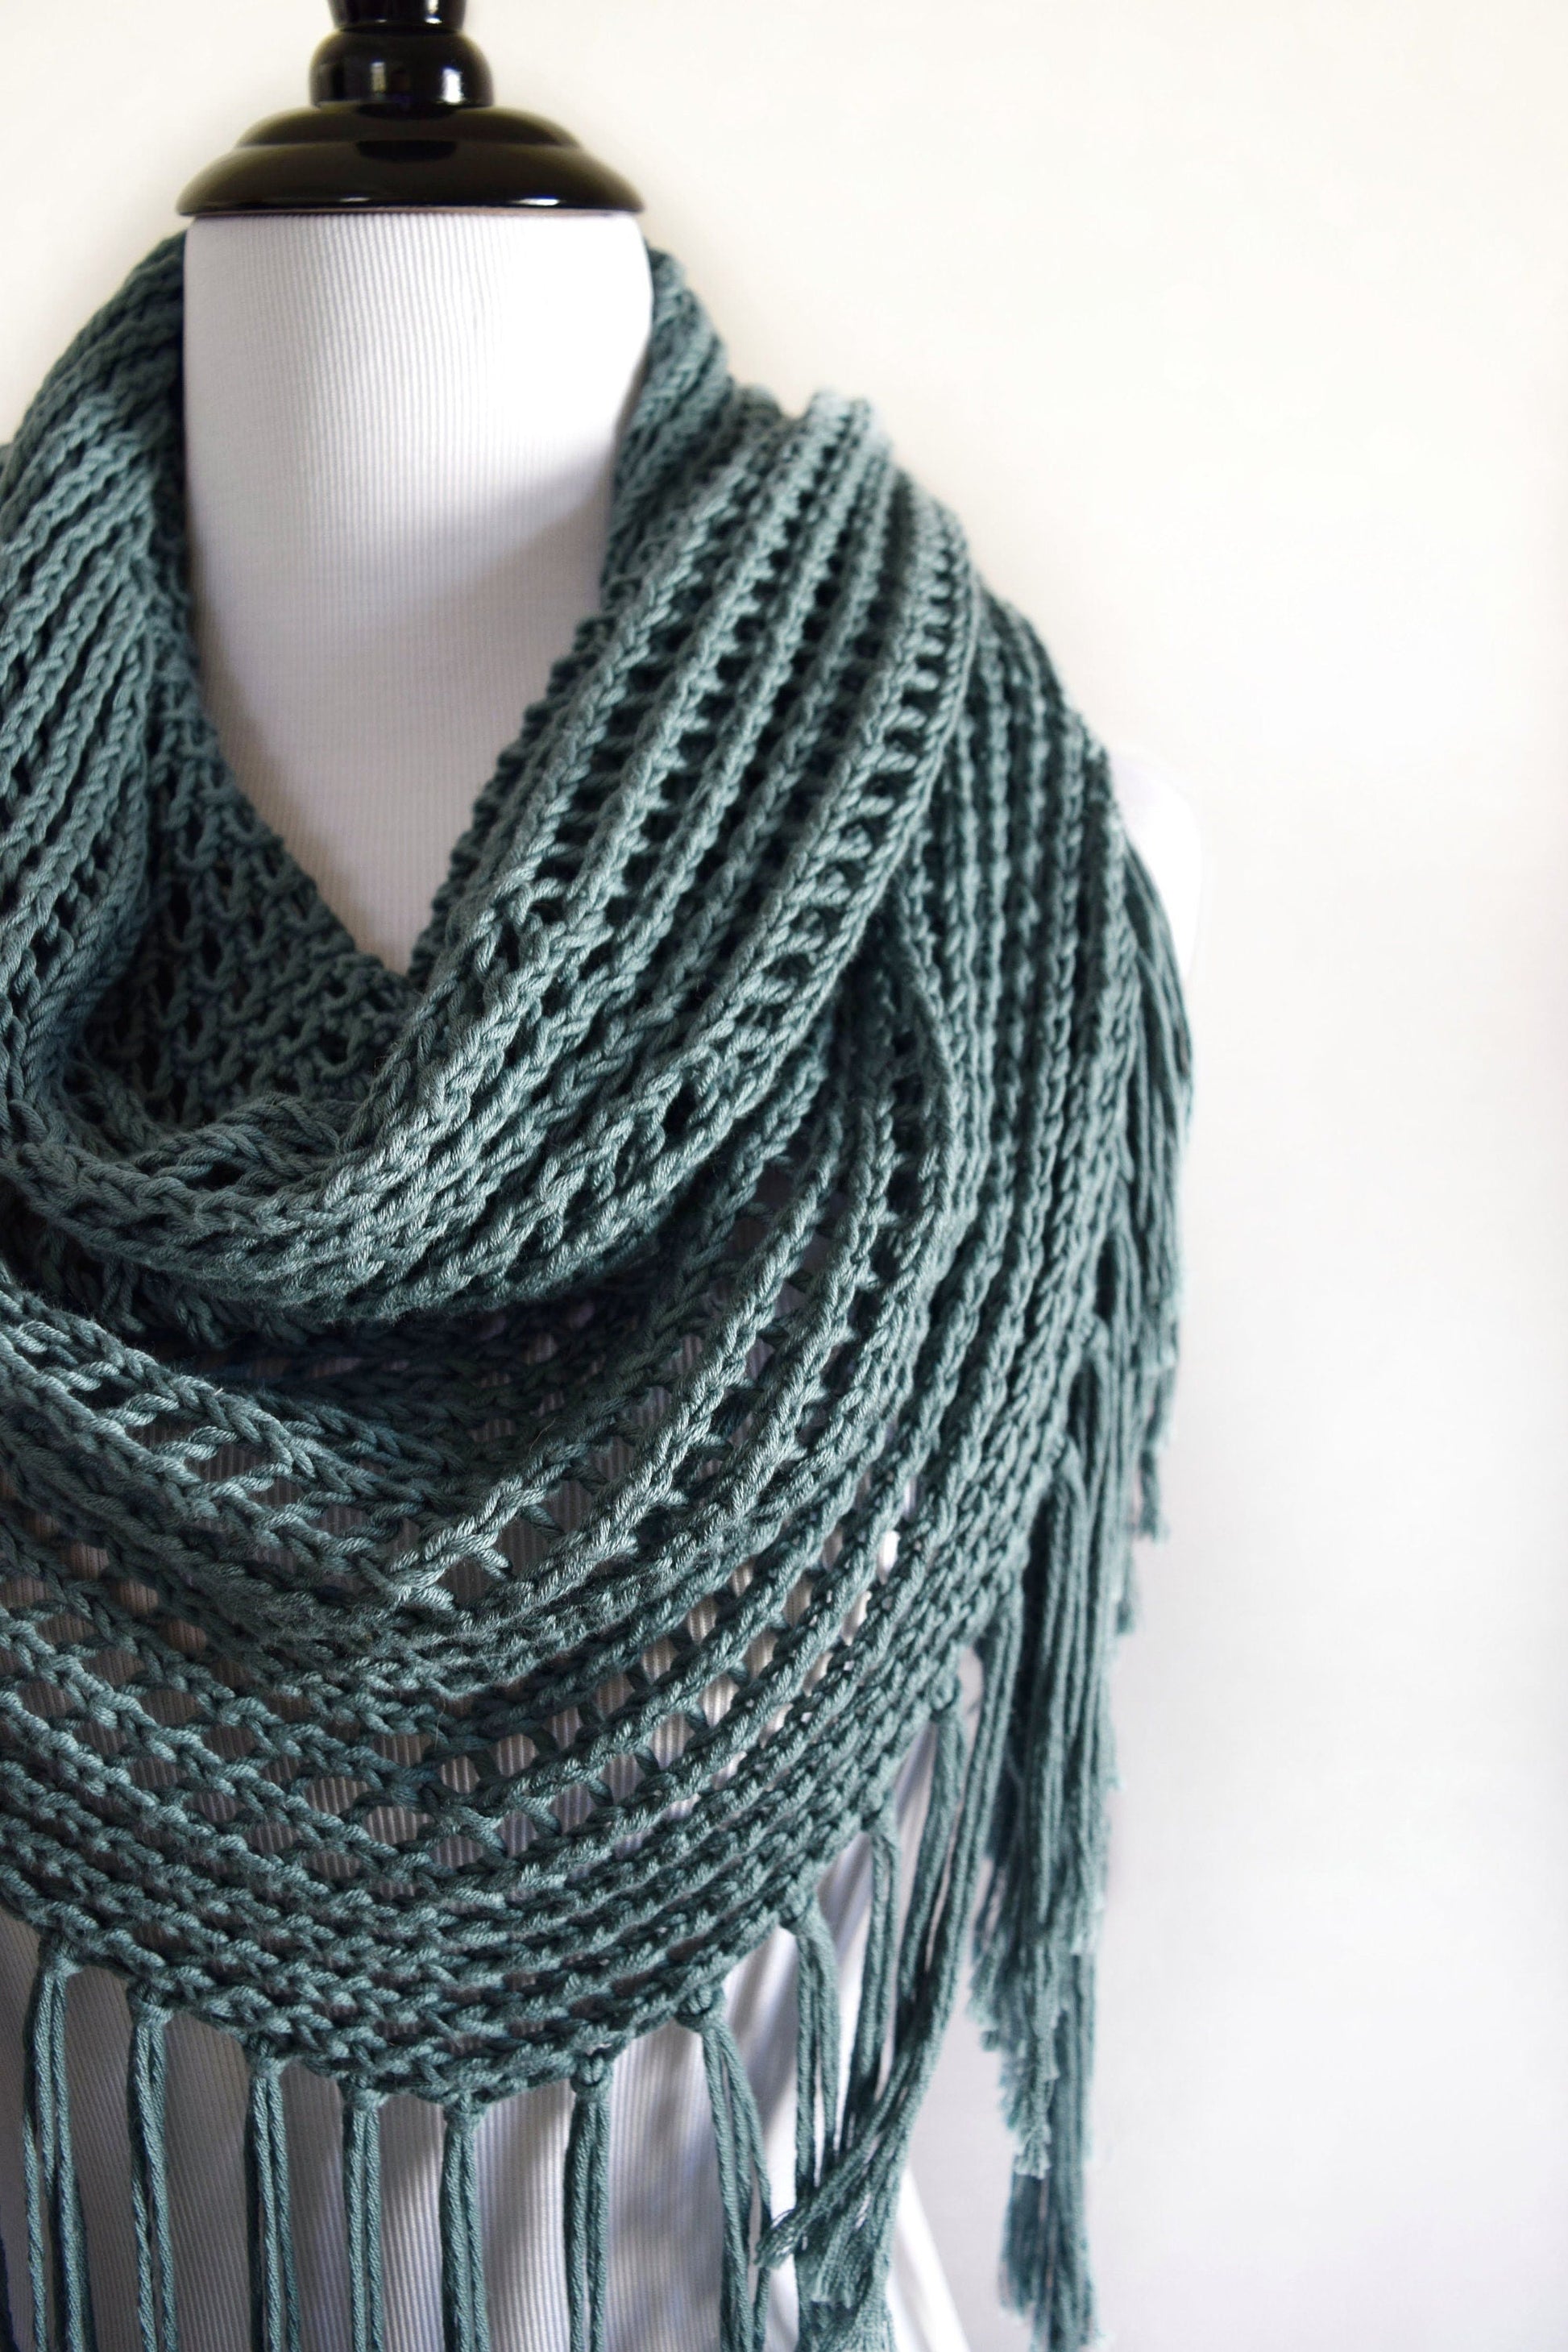 Lace Triangle Shawl (Crochet) – Lion Brand Yarn